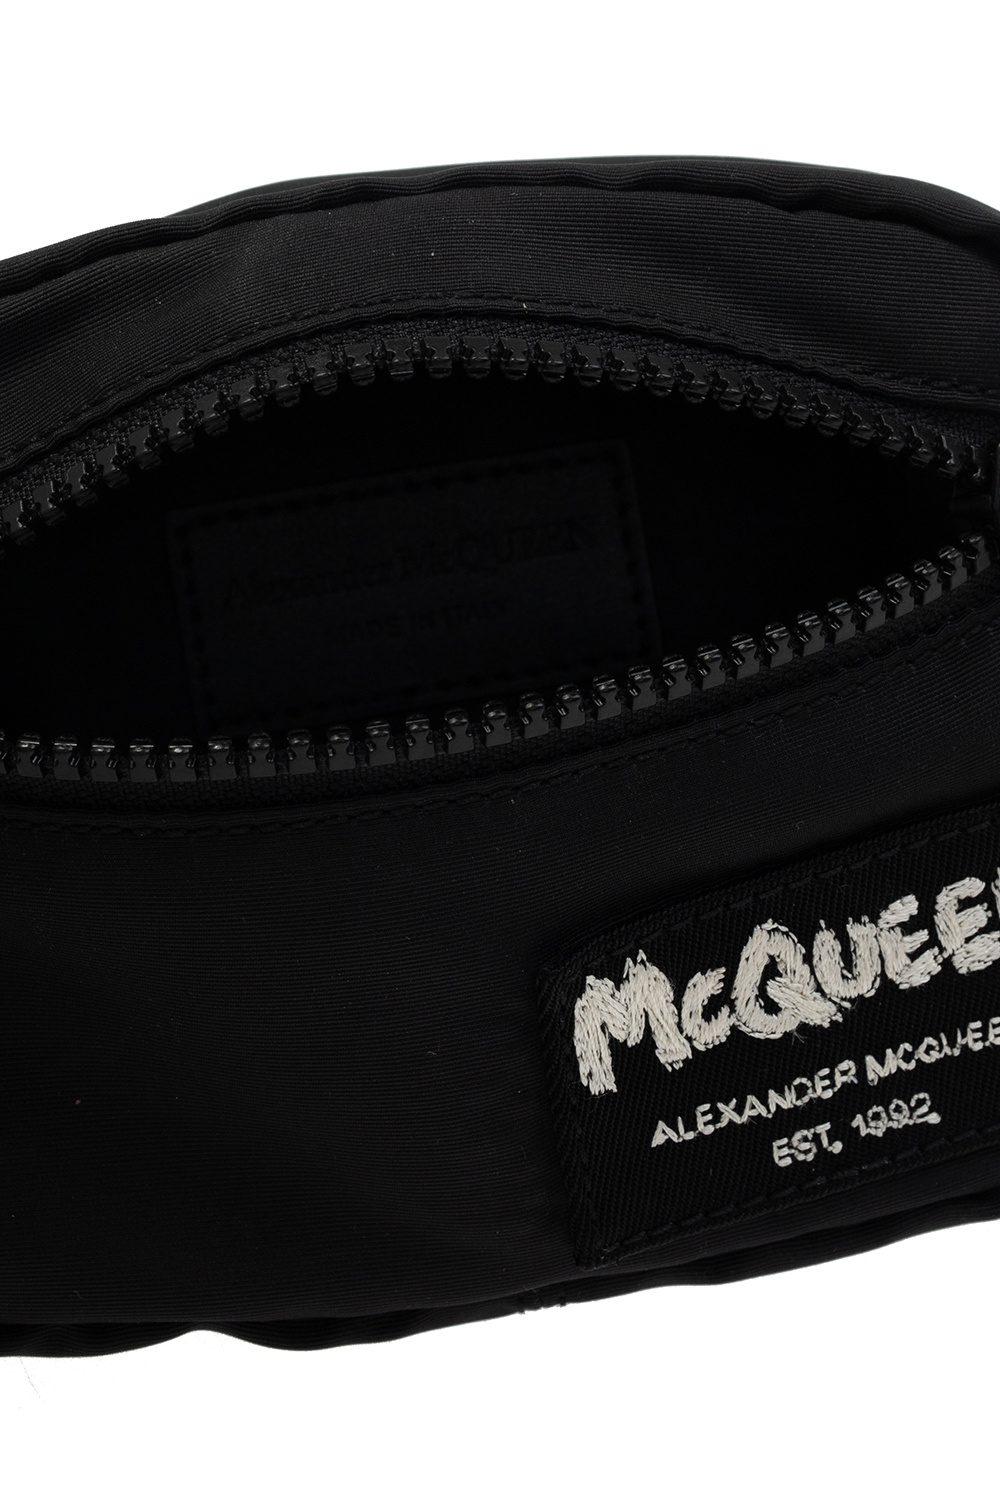 Alexander McQueen Alexander McQueen Baskets surdimensionnees en suede blanches et grises Croc